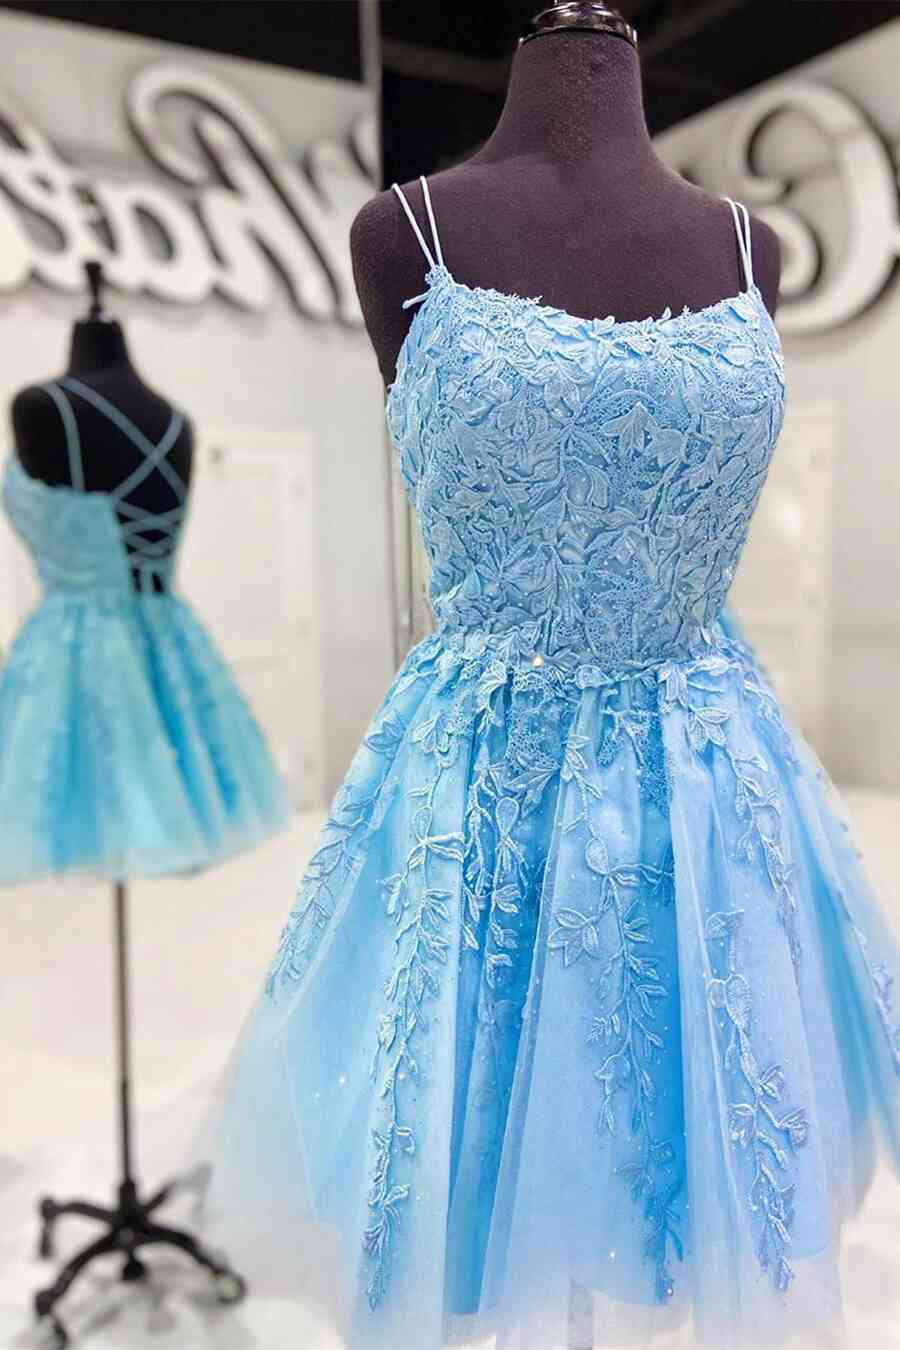 Bridesmaid Dress Dark Green, Blue A-line Spaghetti Straps Lace Short Prom Dresses, Homecoming Dresses